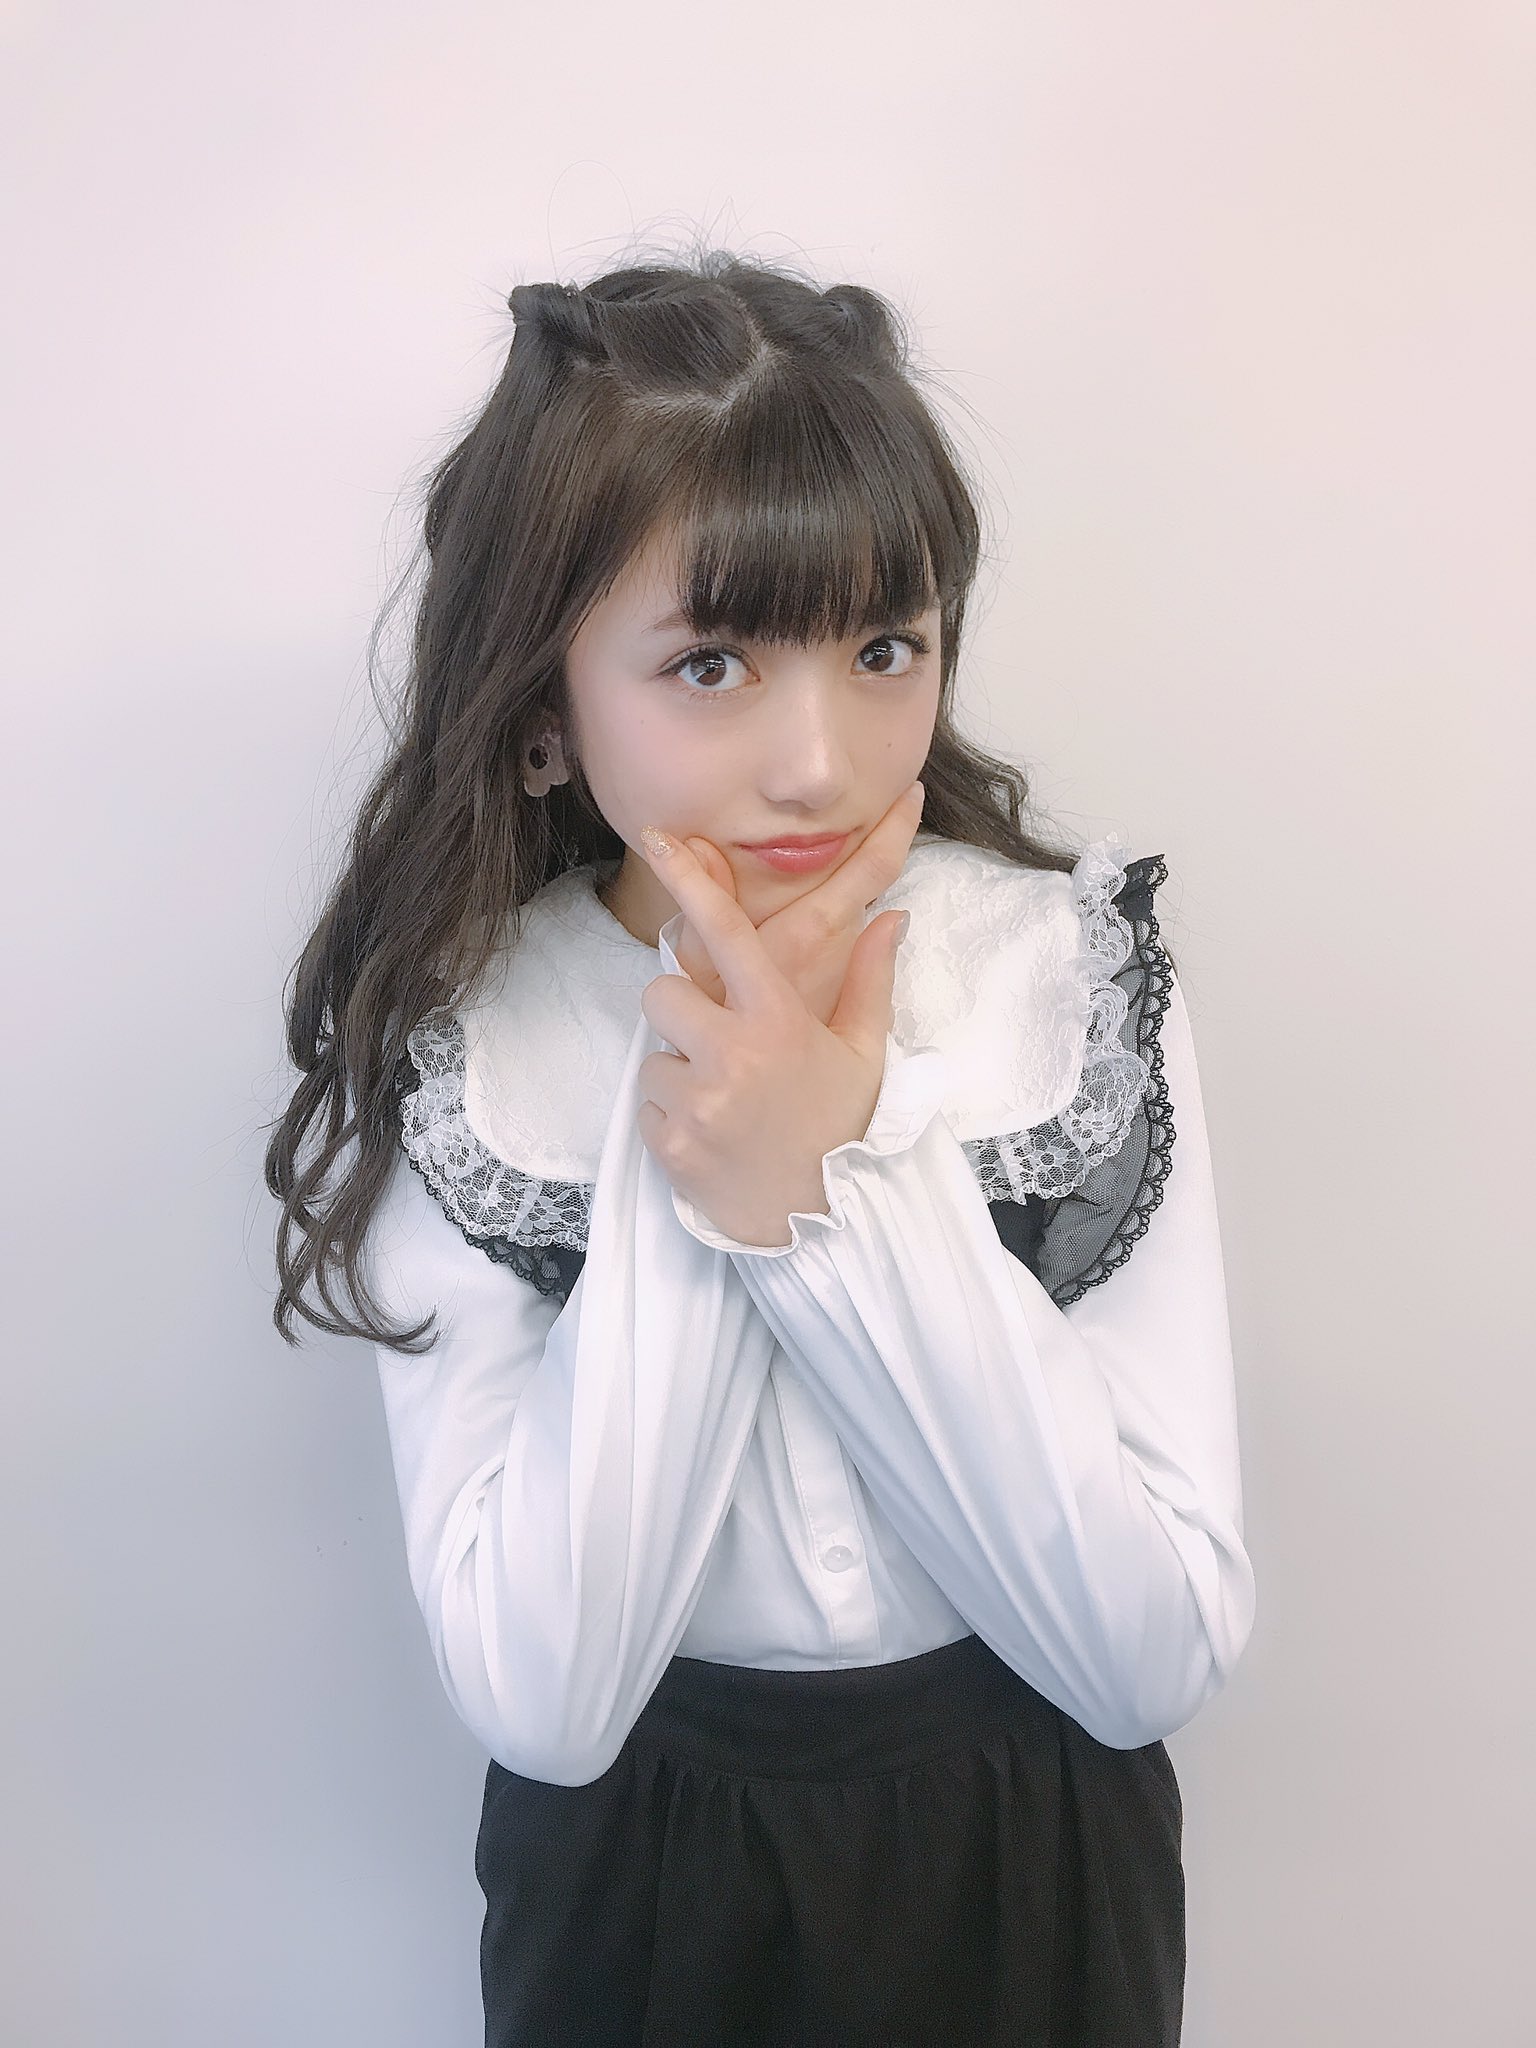 A-Pop Idols 623556 | Arai Hitomi : Tokyo Girls Style | 新井ひとみ 